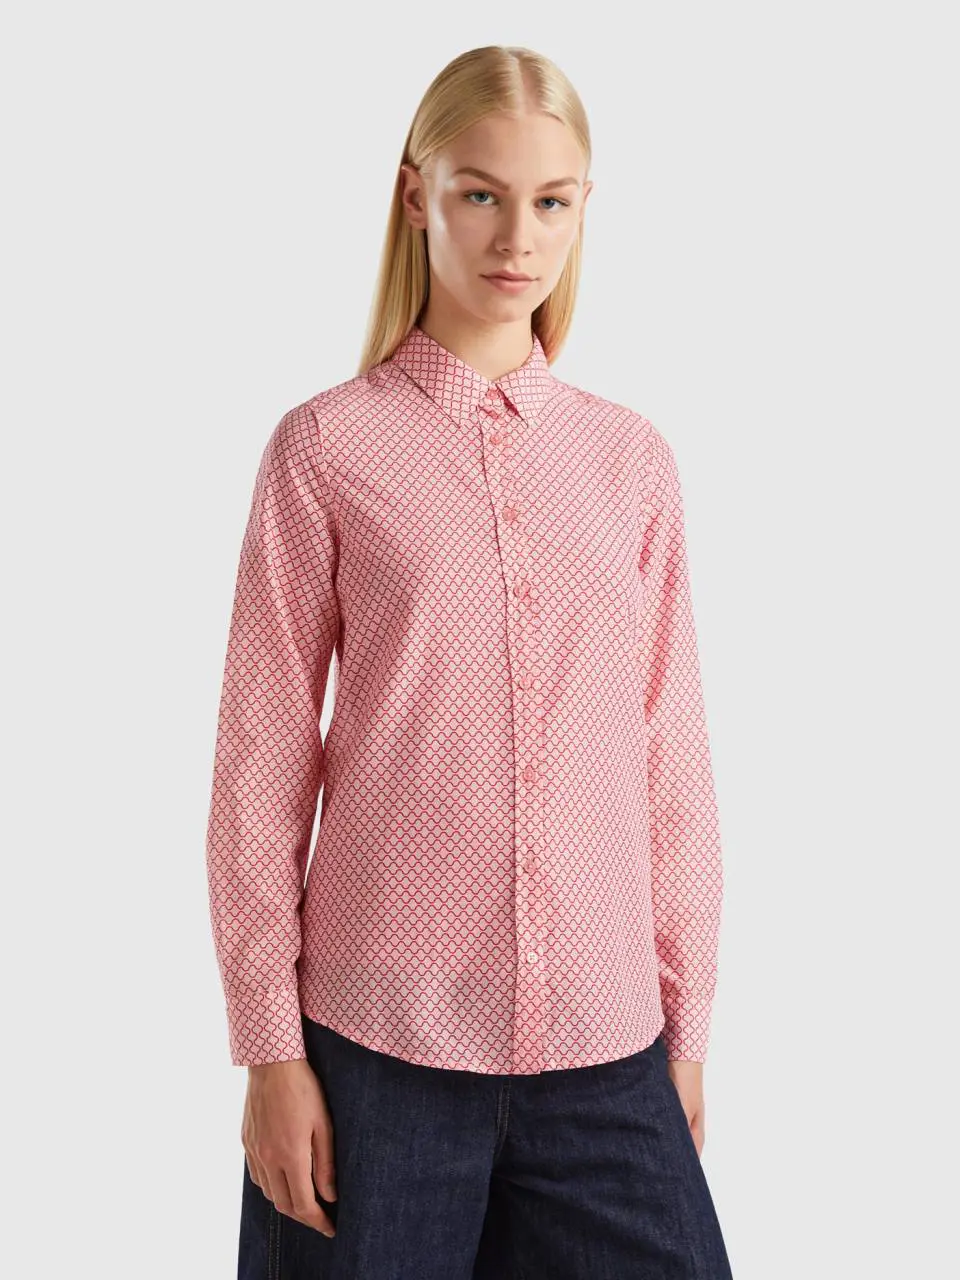 Benetton pink diamond pattern shirt. 1